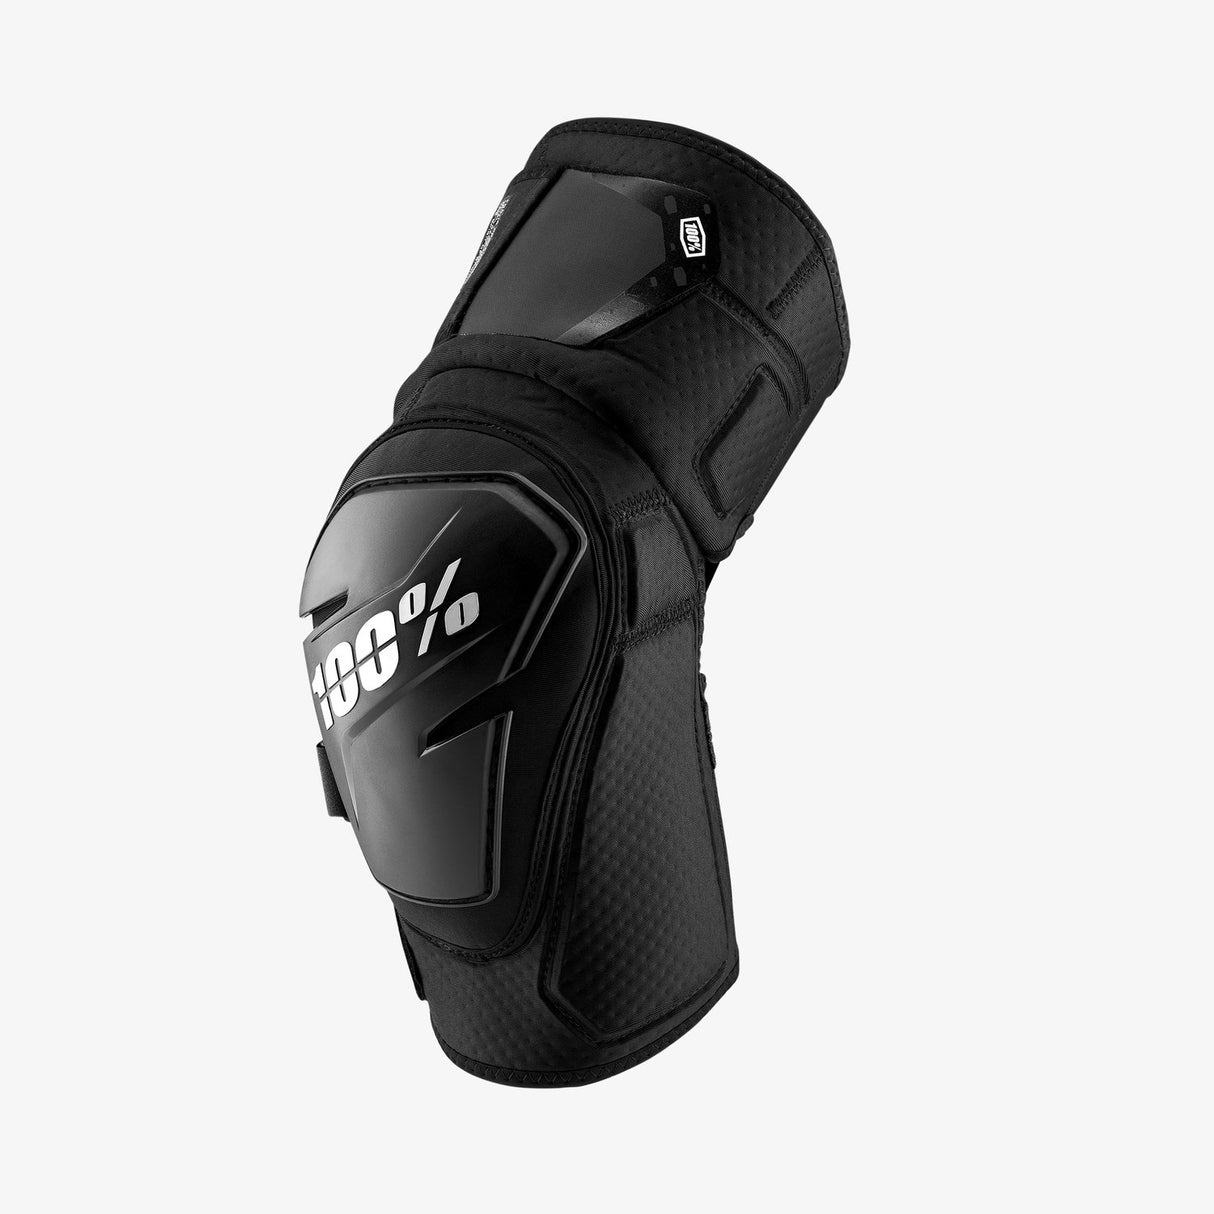 Ride 100% FORTIS Knee Guards/Pads, Color: Black- Size SM/MD